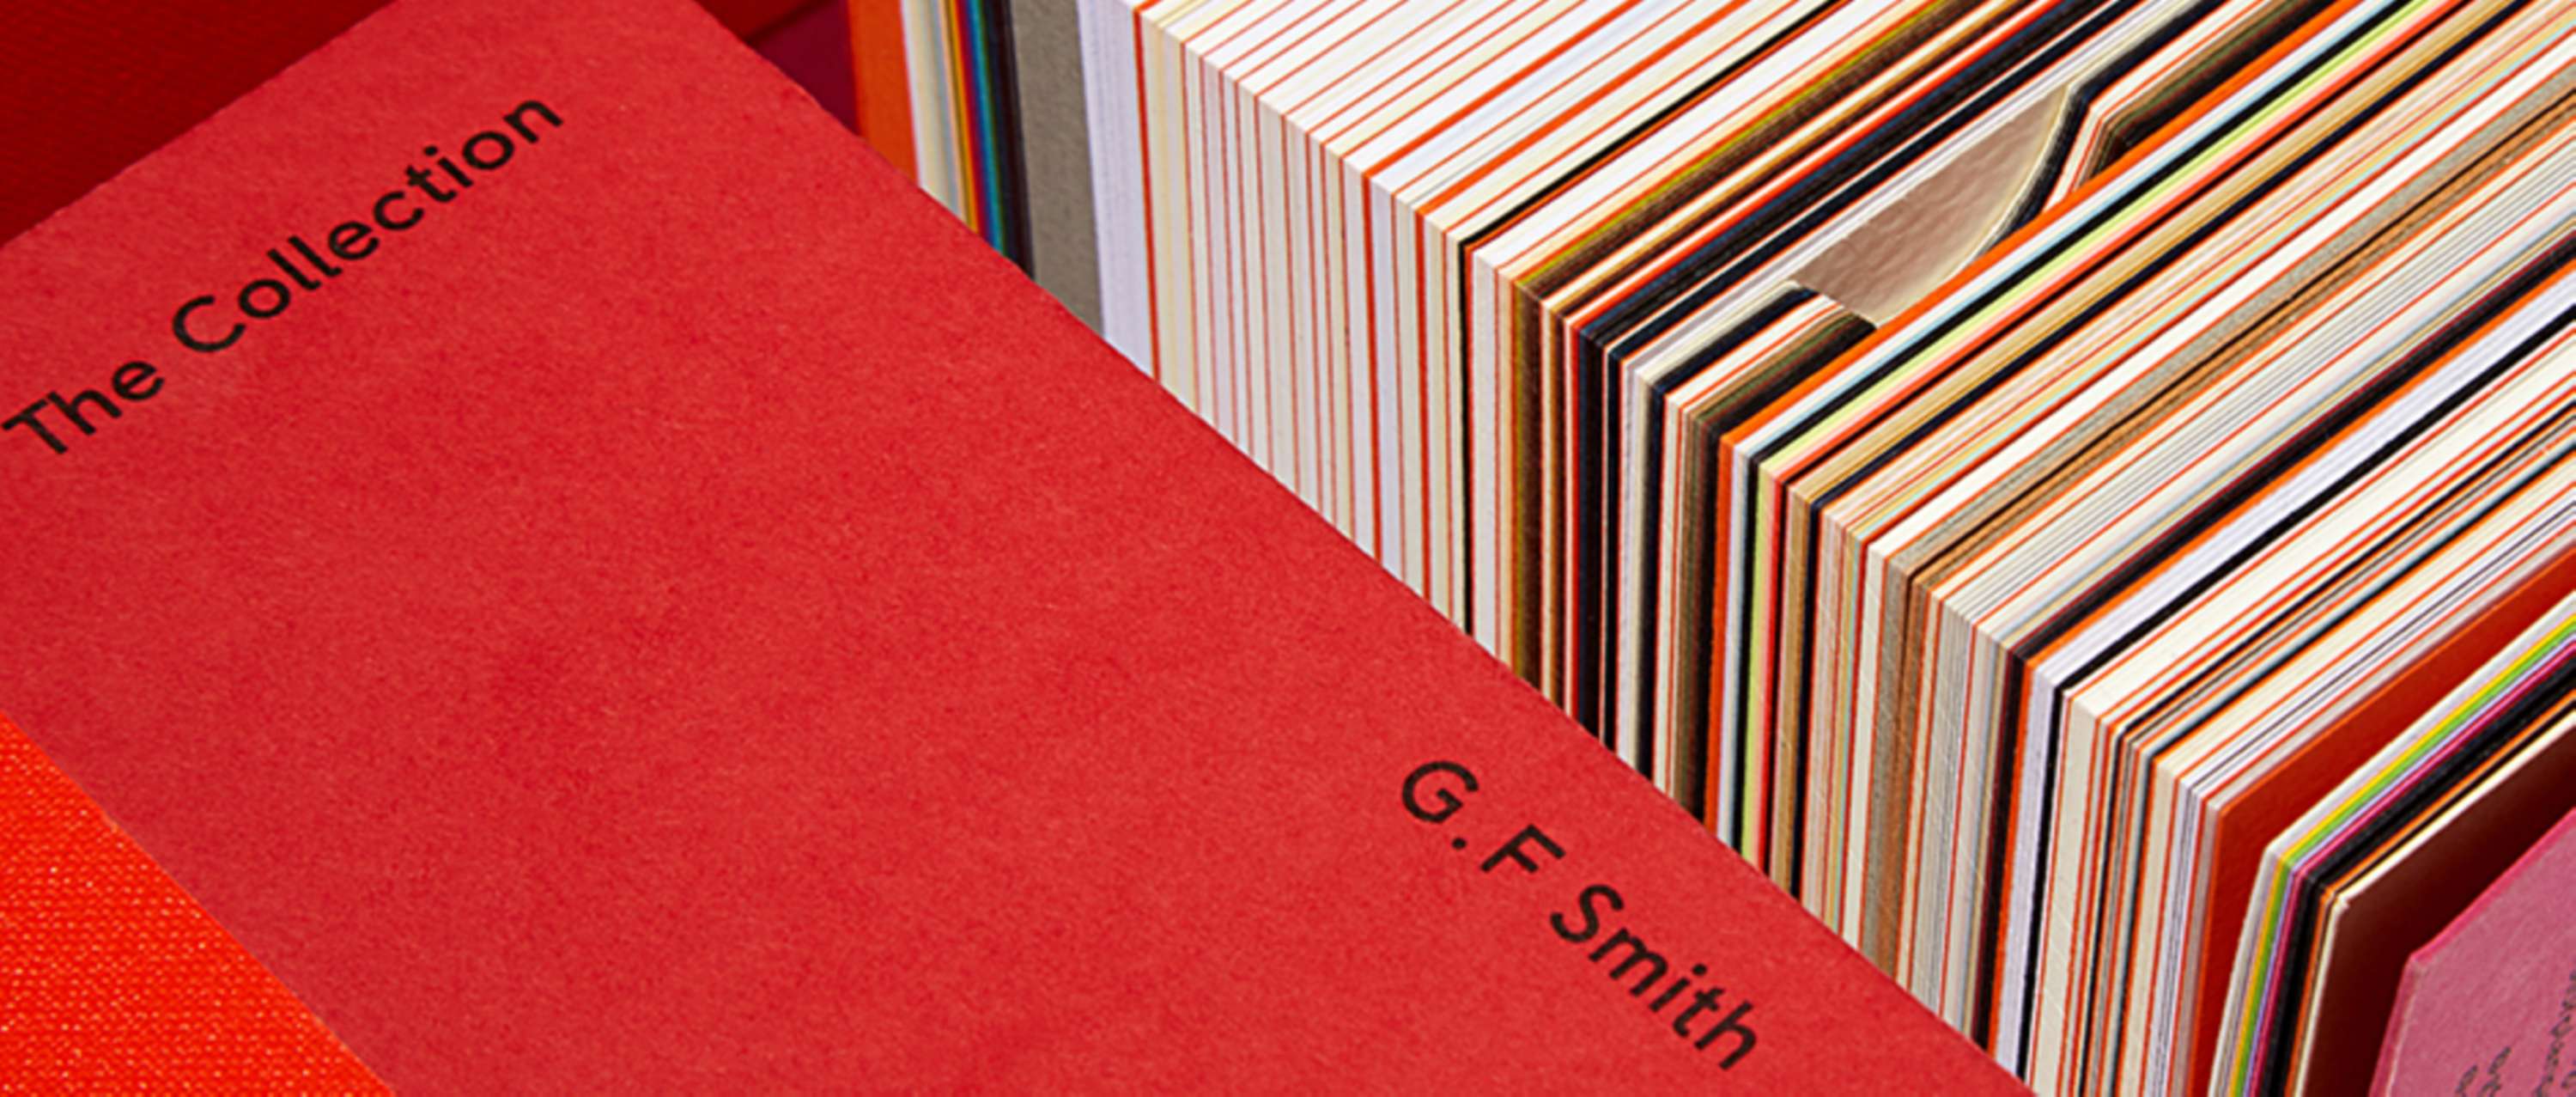 Бумага Colorplan болотный. Creative book Design. Colorplan Vermilion (gf Smith). G.F Smith, Winter & Company и Fedrigoni.